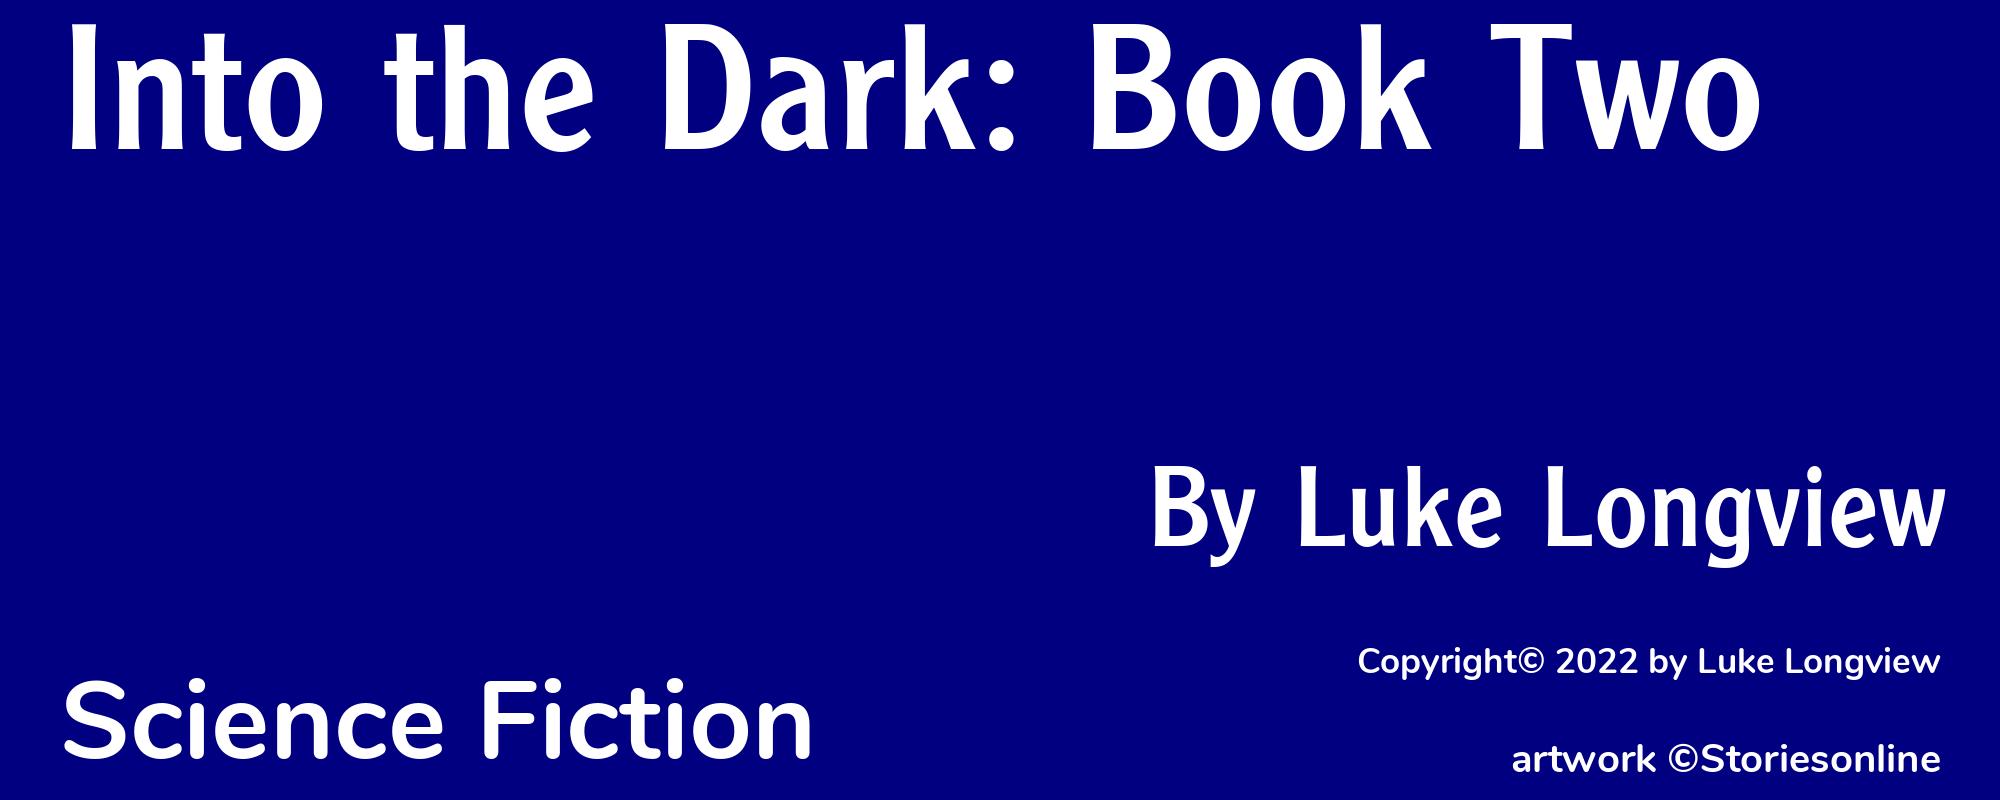 Into the Dark: Book Two - Cover